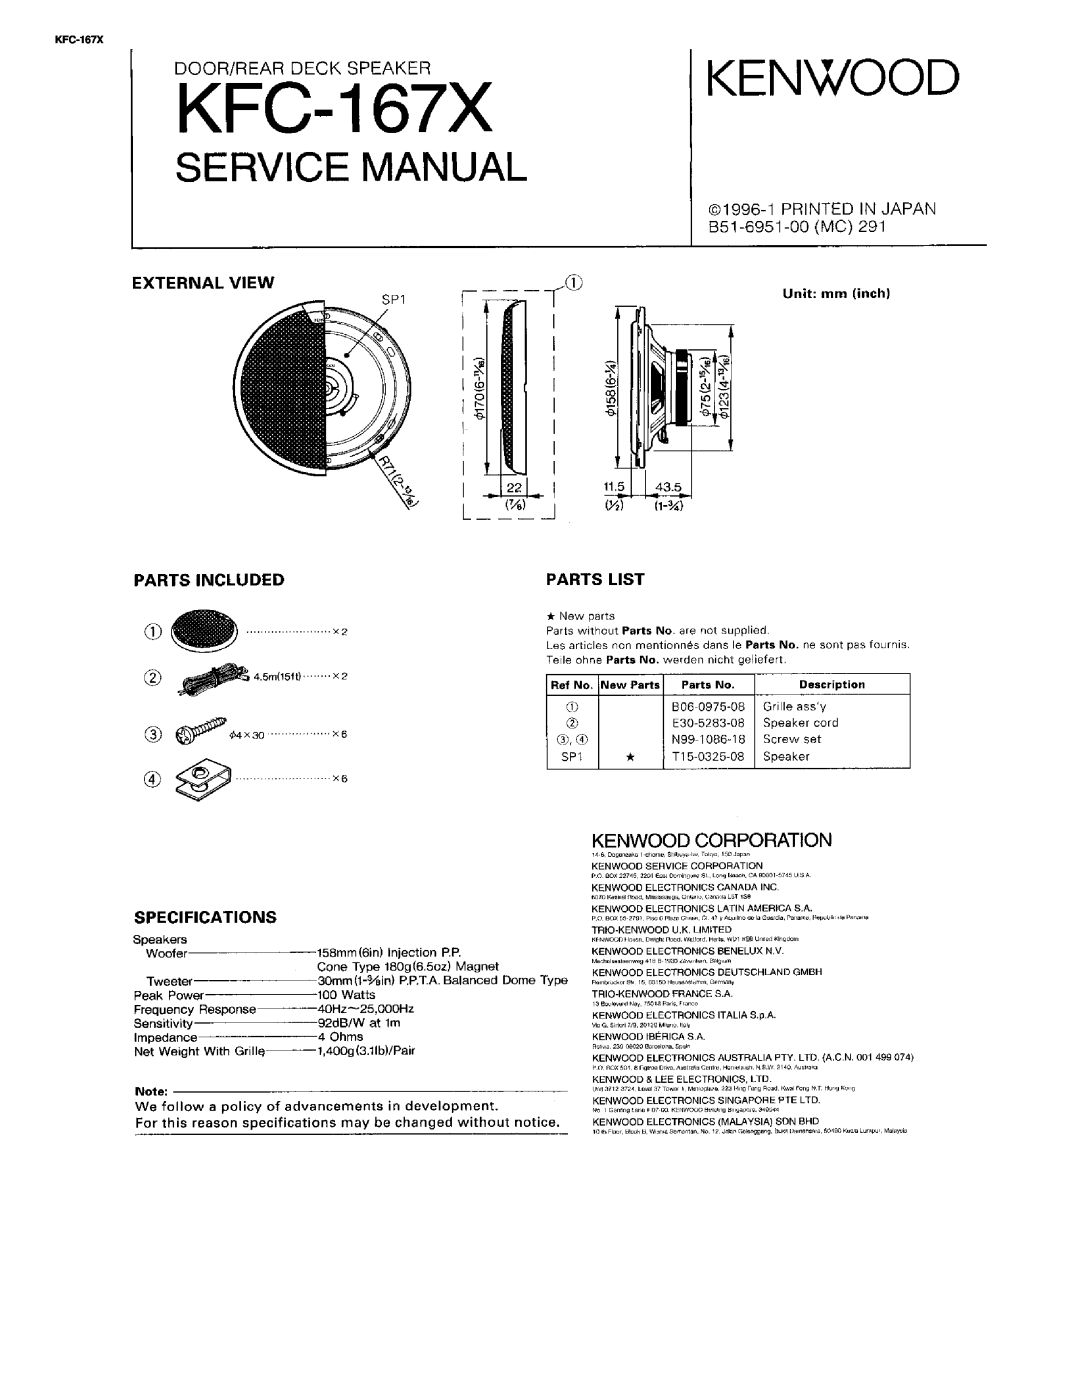 Kenwood KFC-167X manual 